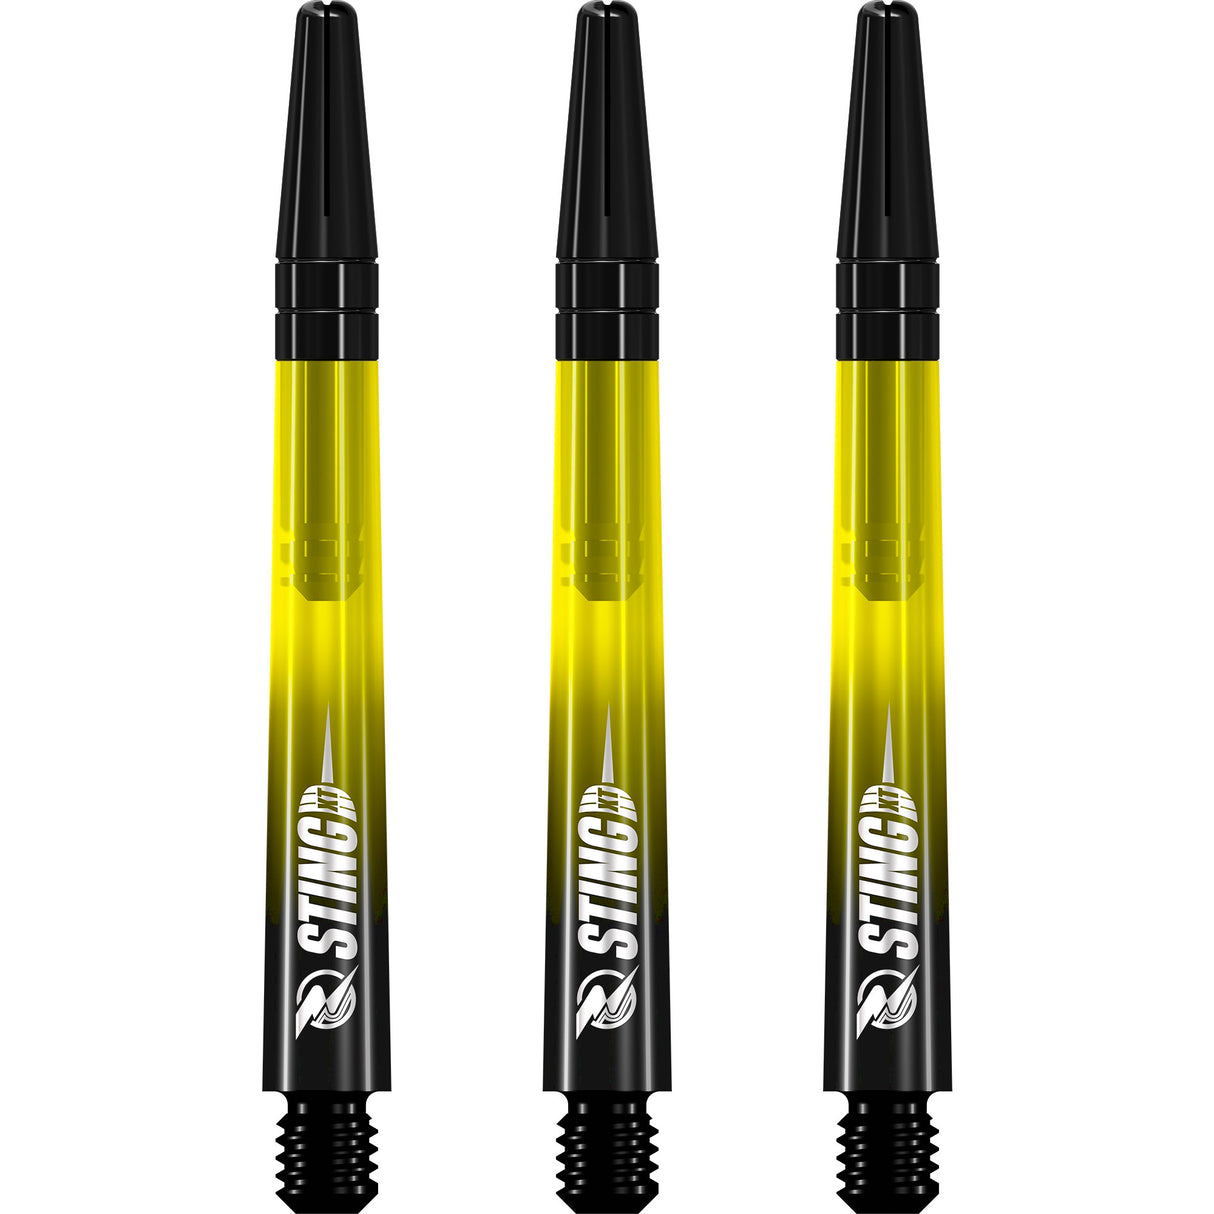 Ruthless Sting XT Dart Shafts - Polycarbonate - Gradient Black & Yellow - Black Top